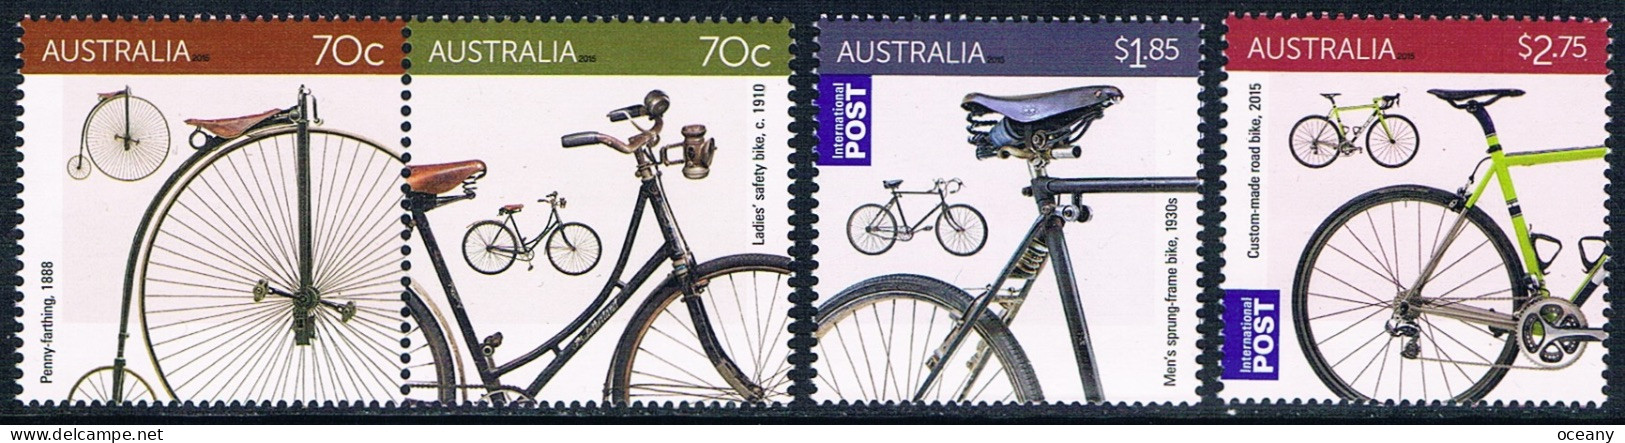 Australie - Transports : Bicyclettes 4213/4216 (année 2015) ** - Mint Stamps